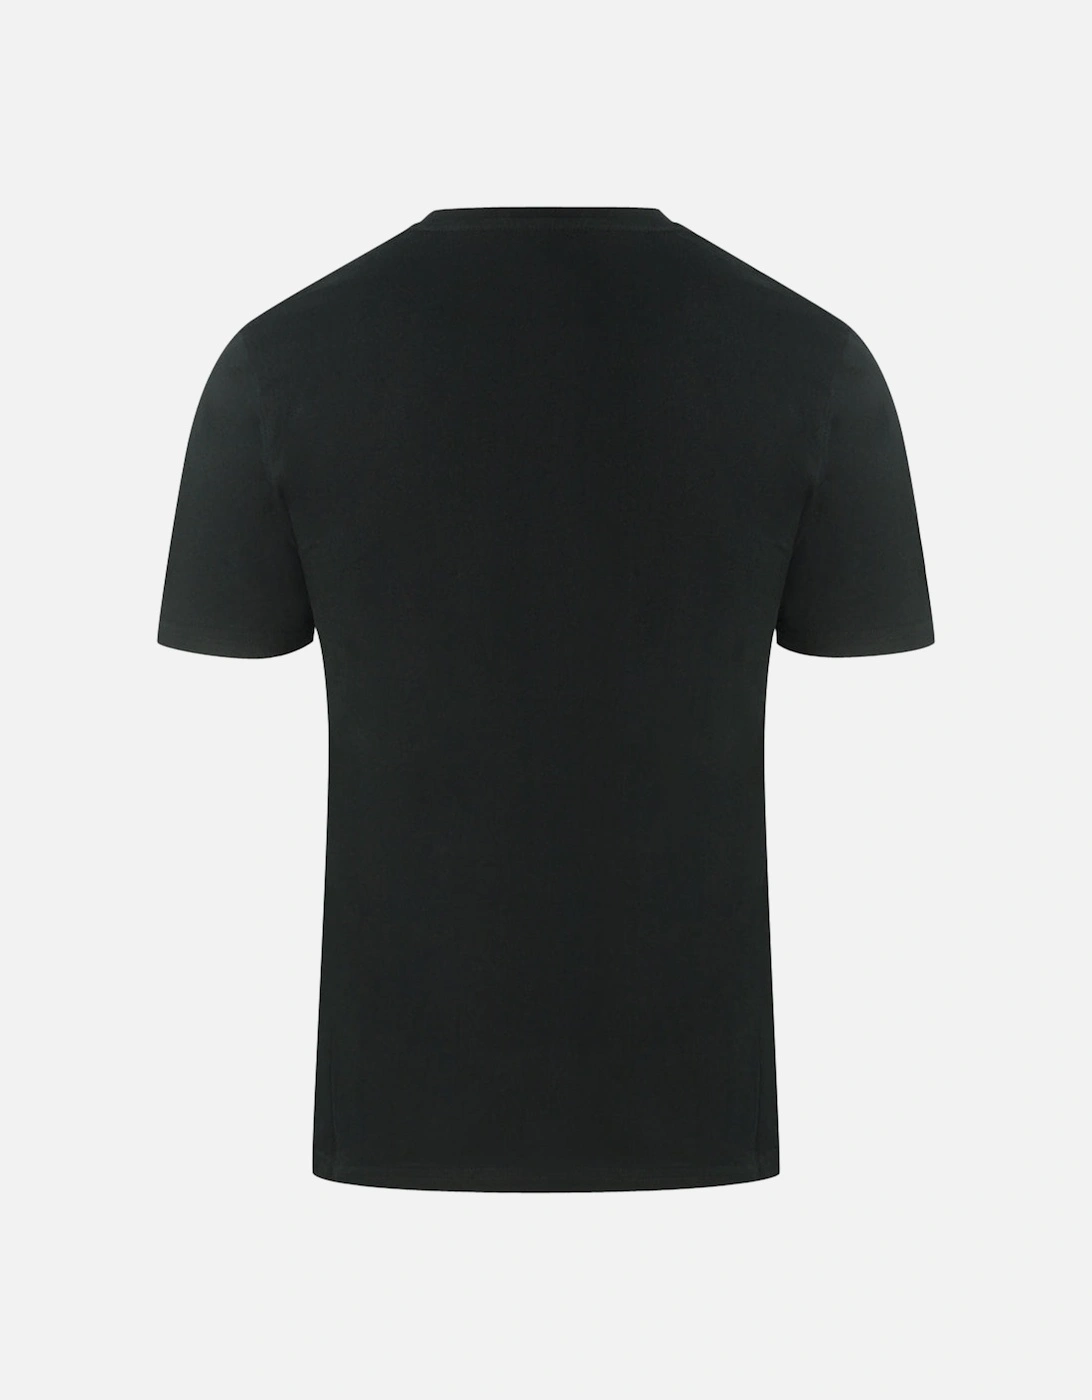 Newport Logo Black T-Shirt